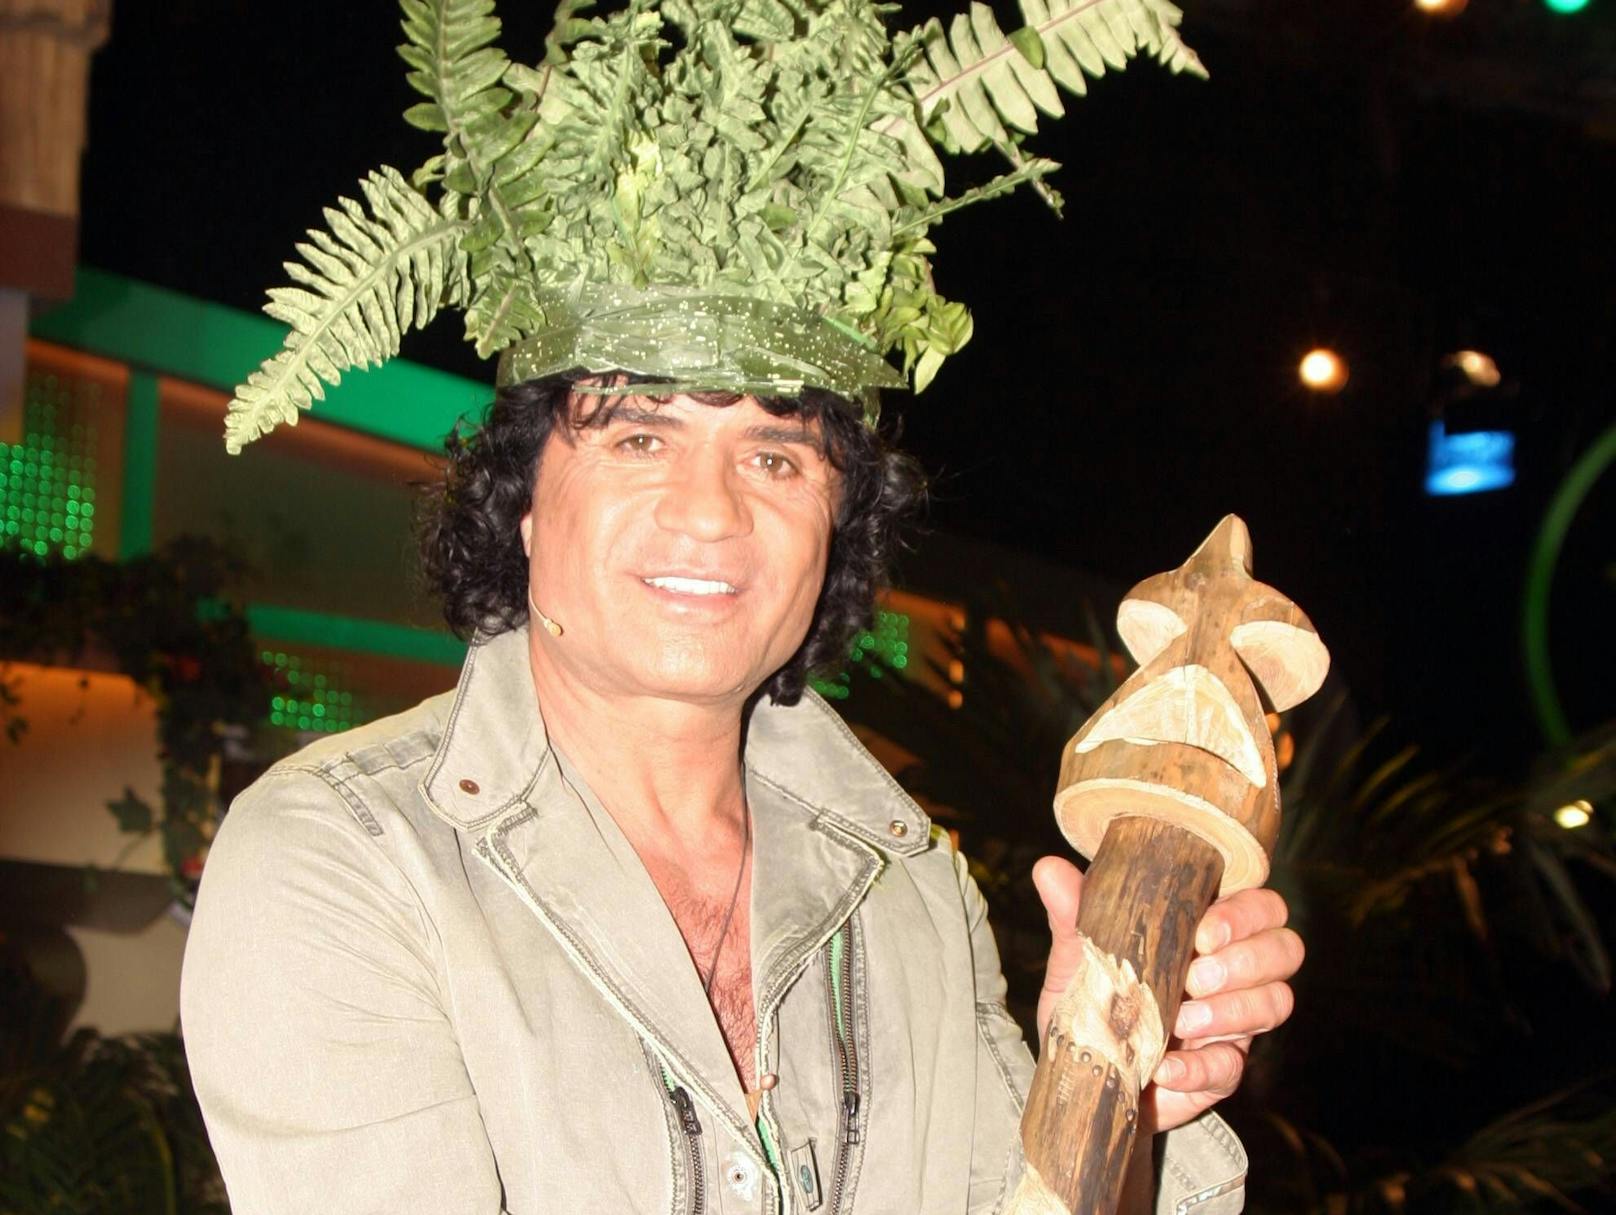 Lucas' verstorbener Vater <strong>Costa Cordalis</strong> wurde 2004 zum ersten Dschungelkönig gekrönt. <br>